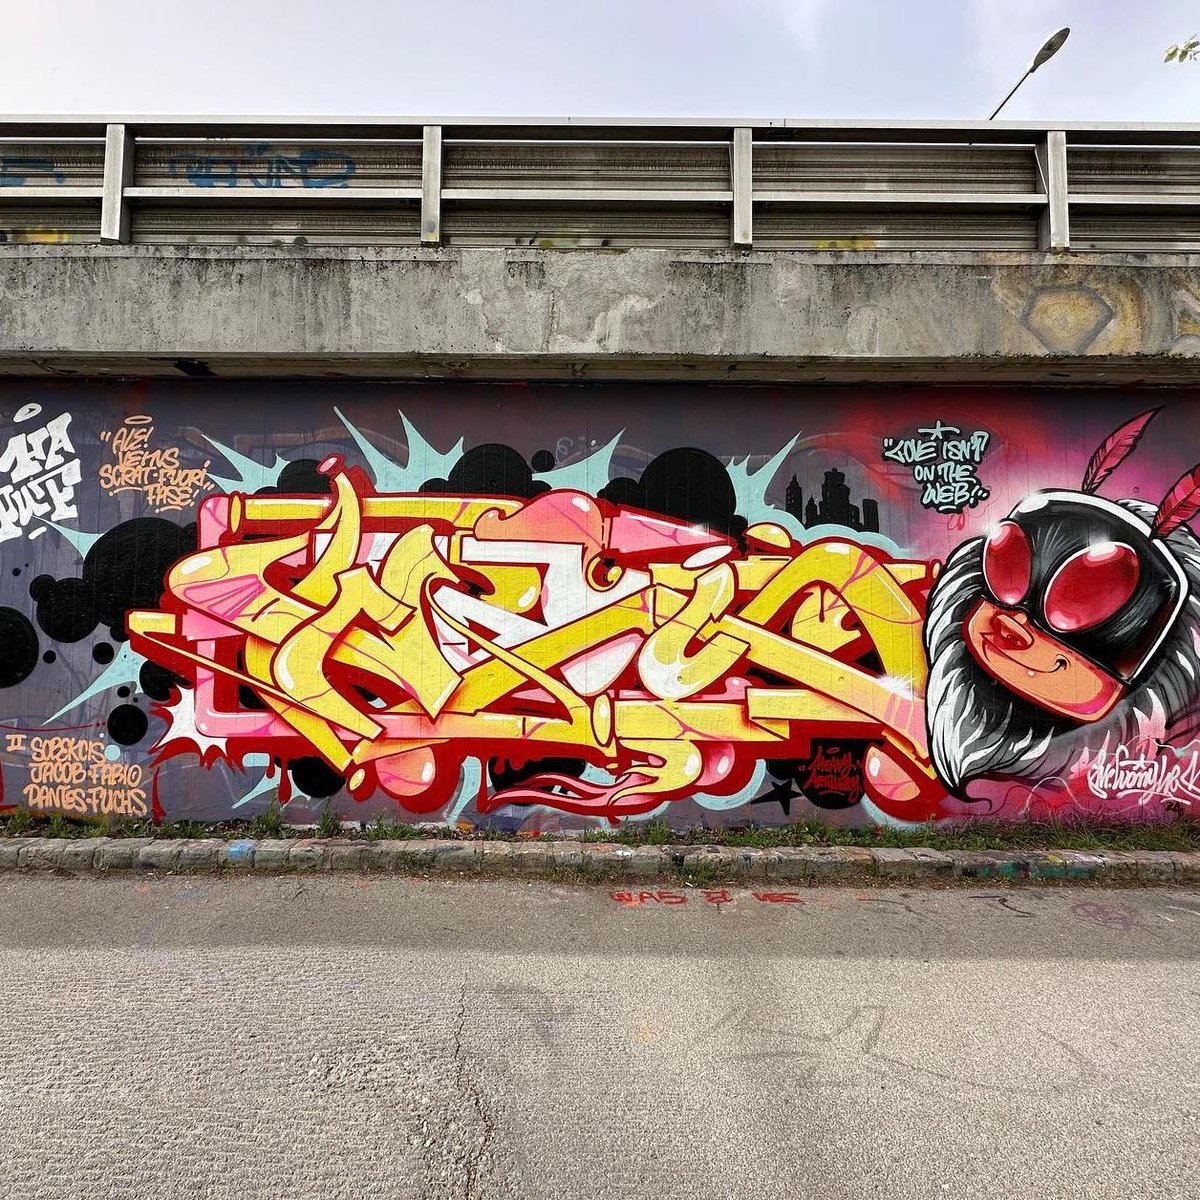 We got a new interview up on our blog with @mrwanys bombingscience.com/wany-interview/
⁠
#mrwany #wany #wanygraffiti #italy #italianartist #italygraffiti #graffitiitaly #graff #graffiti #graffitiartist #bombingscience #artist #artistinterview ⁠